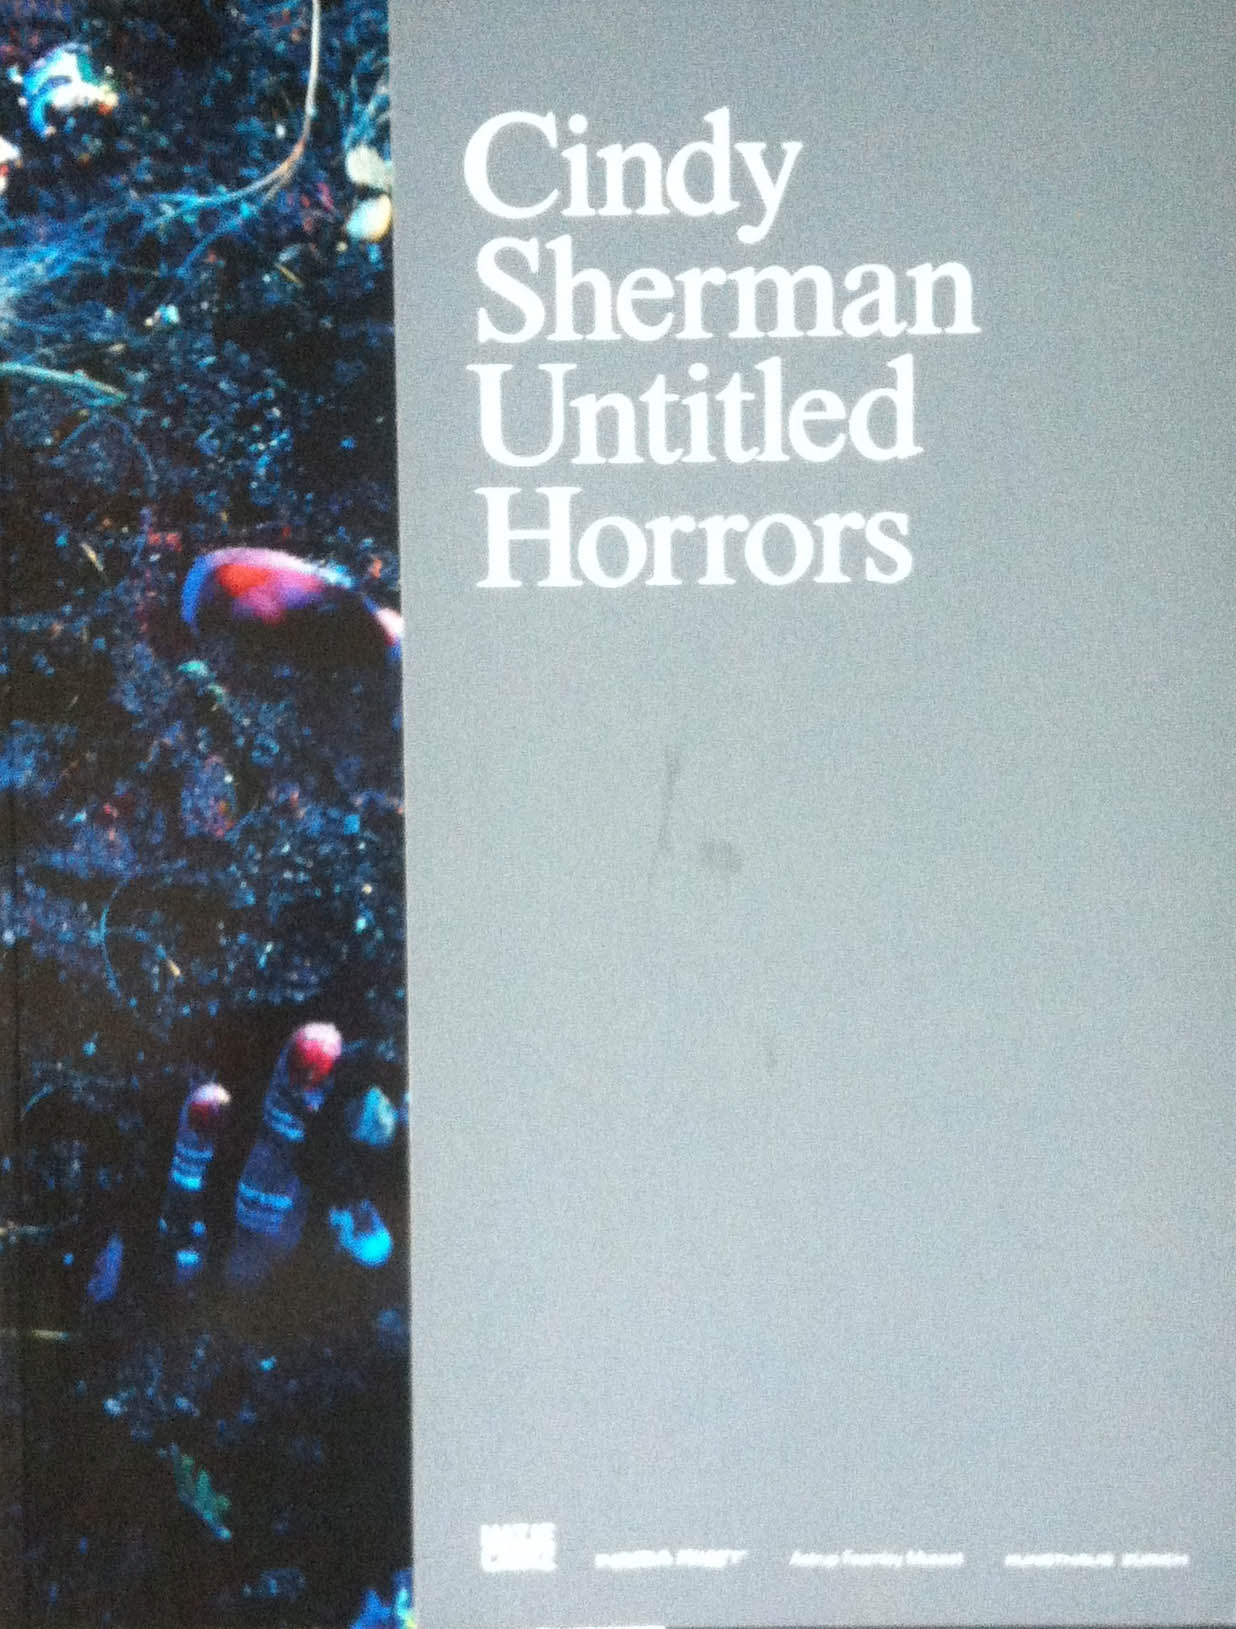 Sherman, Cindy. Untitled Horrors.